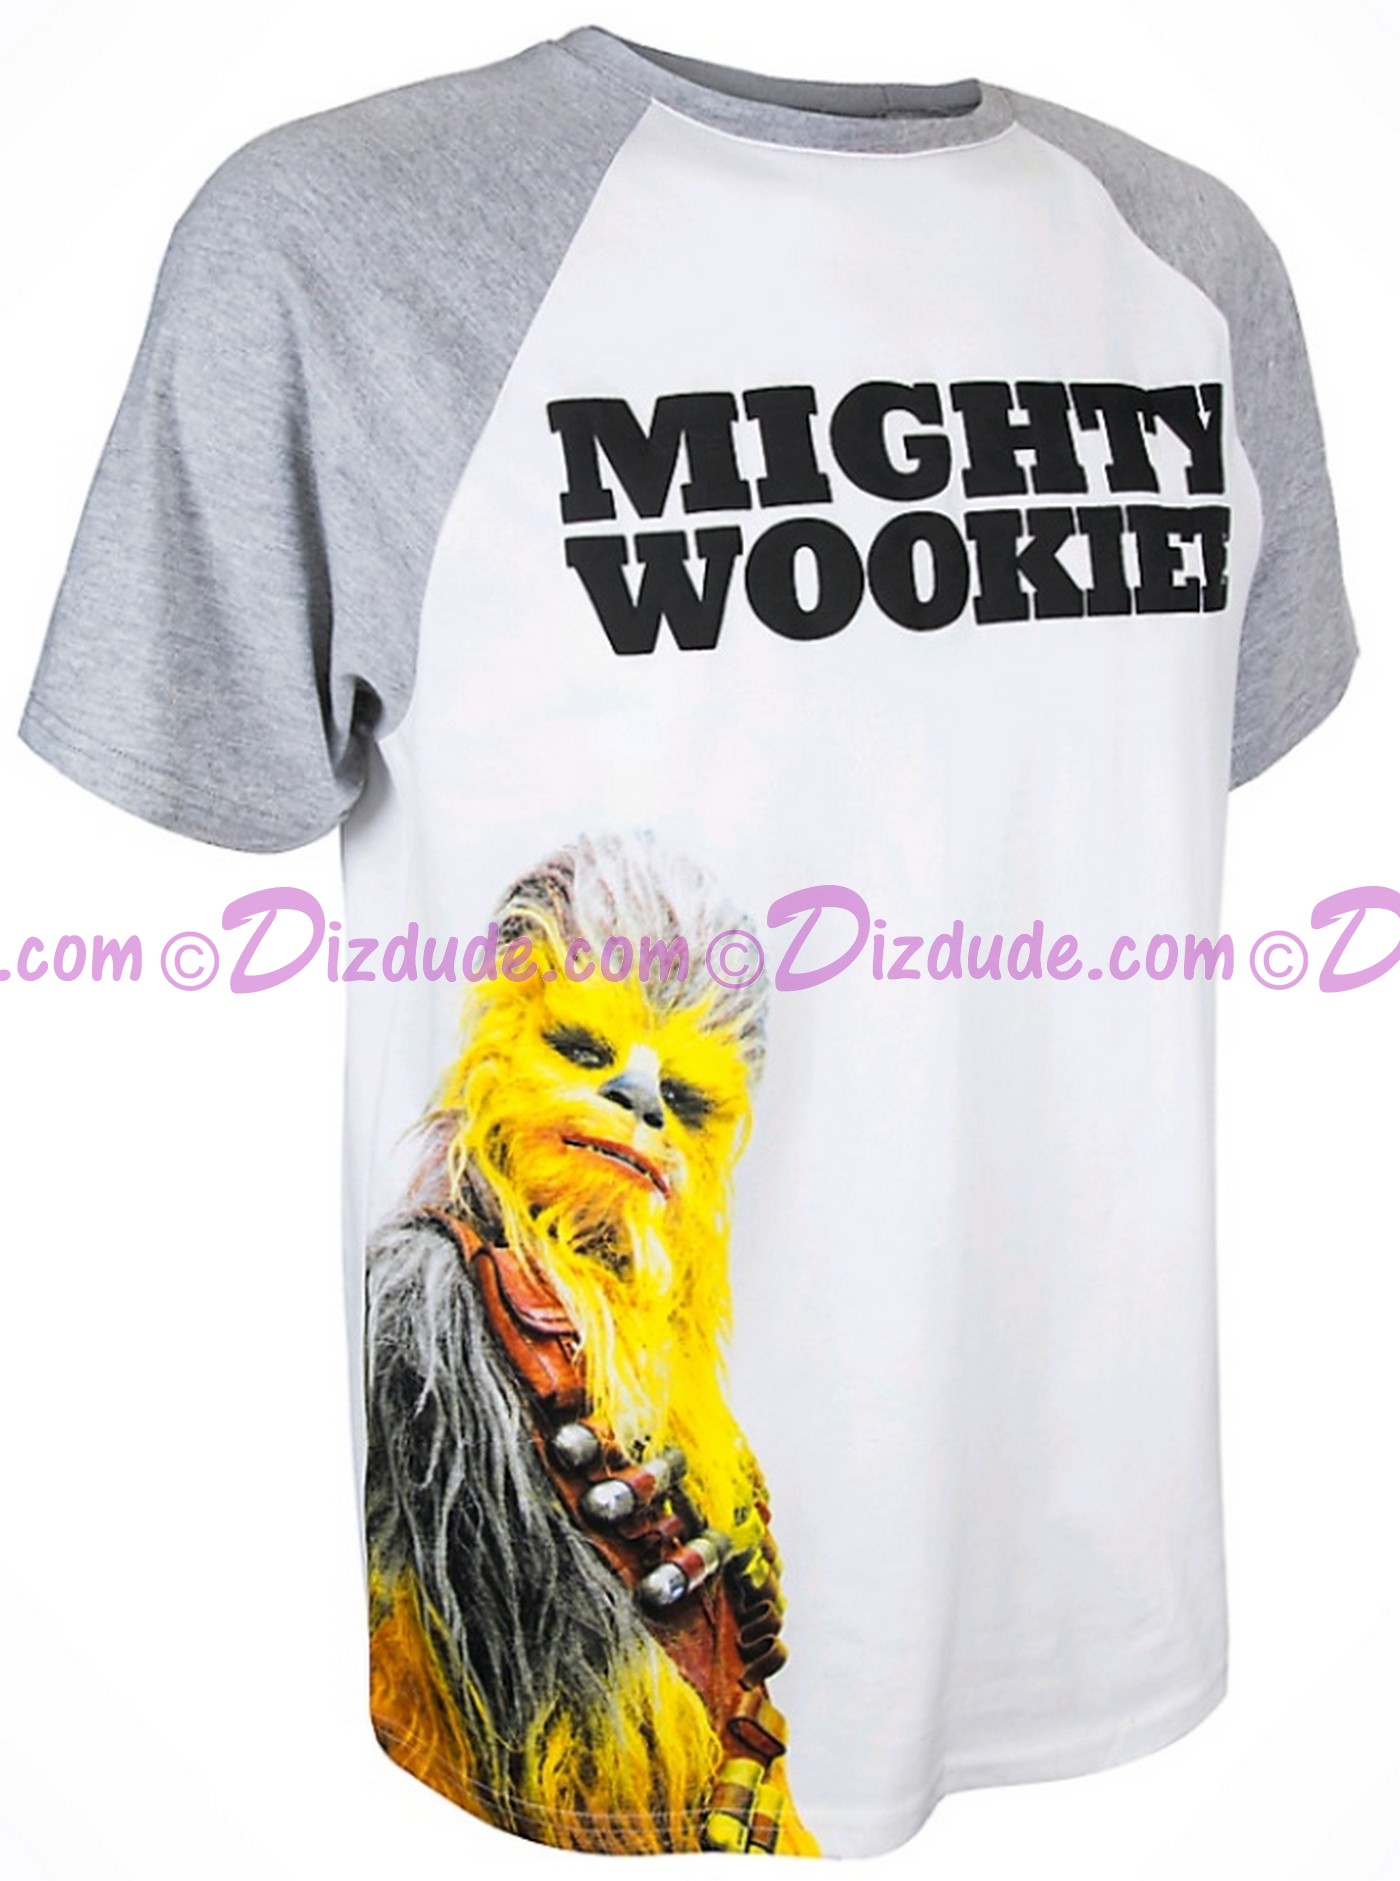 Disney SOLO A Star Wars Story Mighty Wookiee Adult T-Shirt (Tshirt, T shirt or Tee) © Dizdude.com